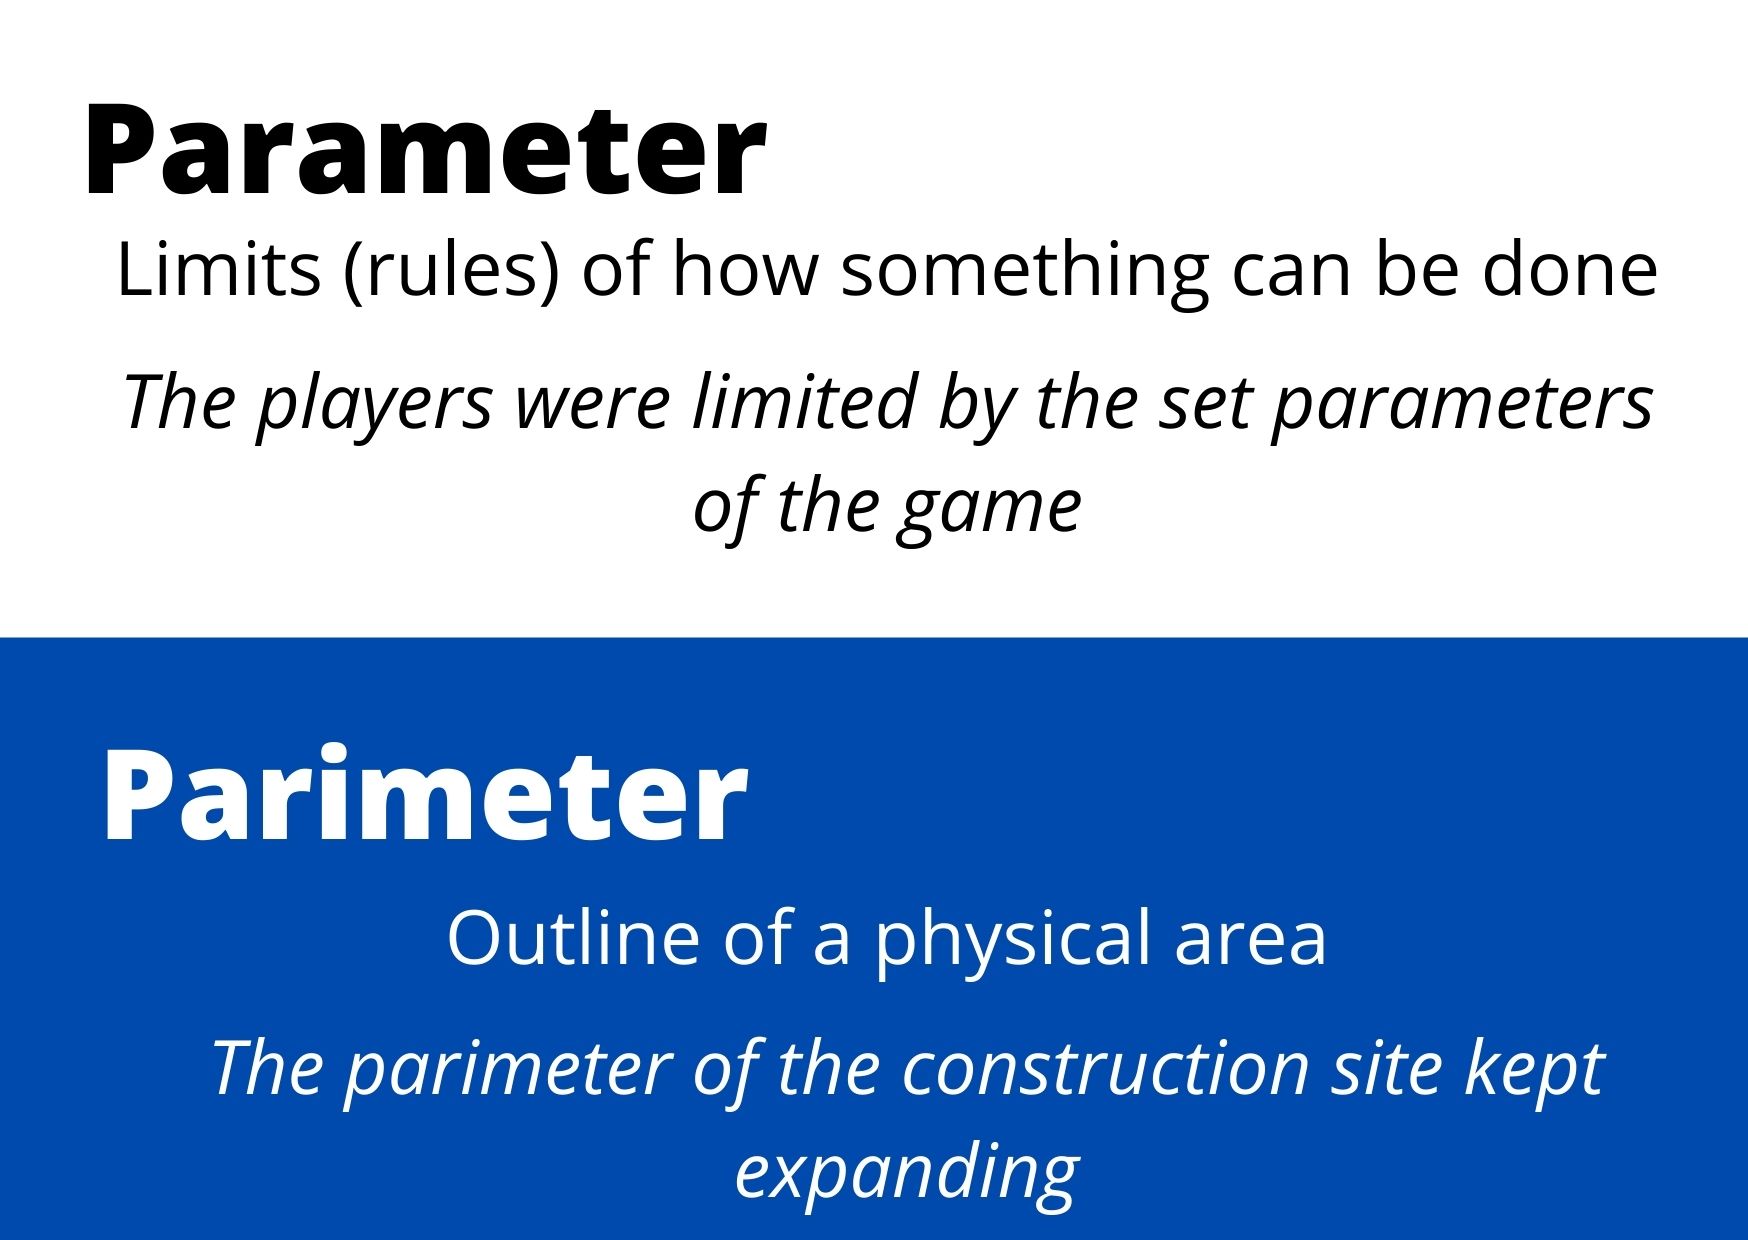 Parameter vs. Parimeter (Parameter - set of limitations or rules, Parimeter - an outline of a physical area)